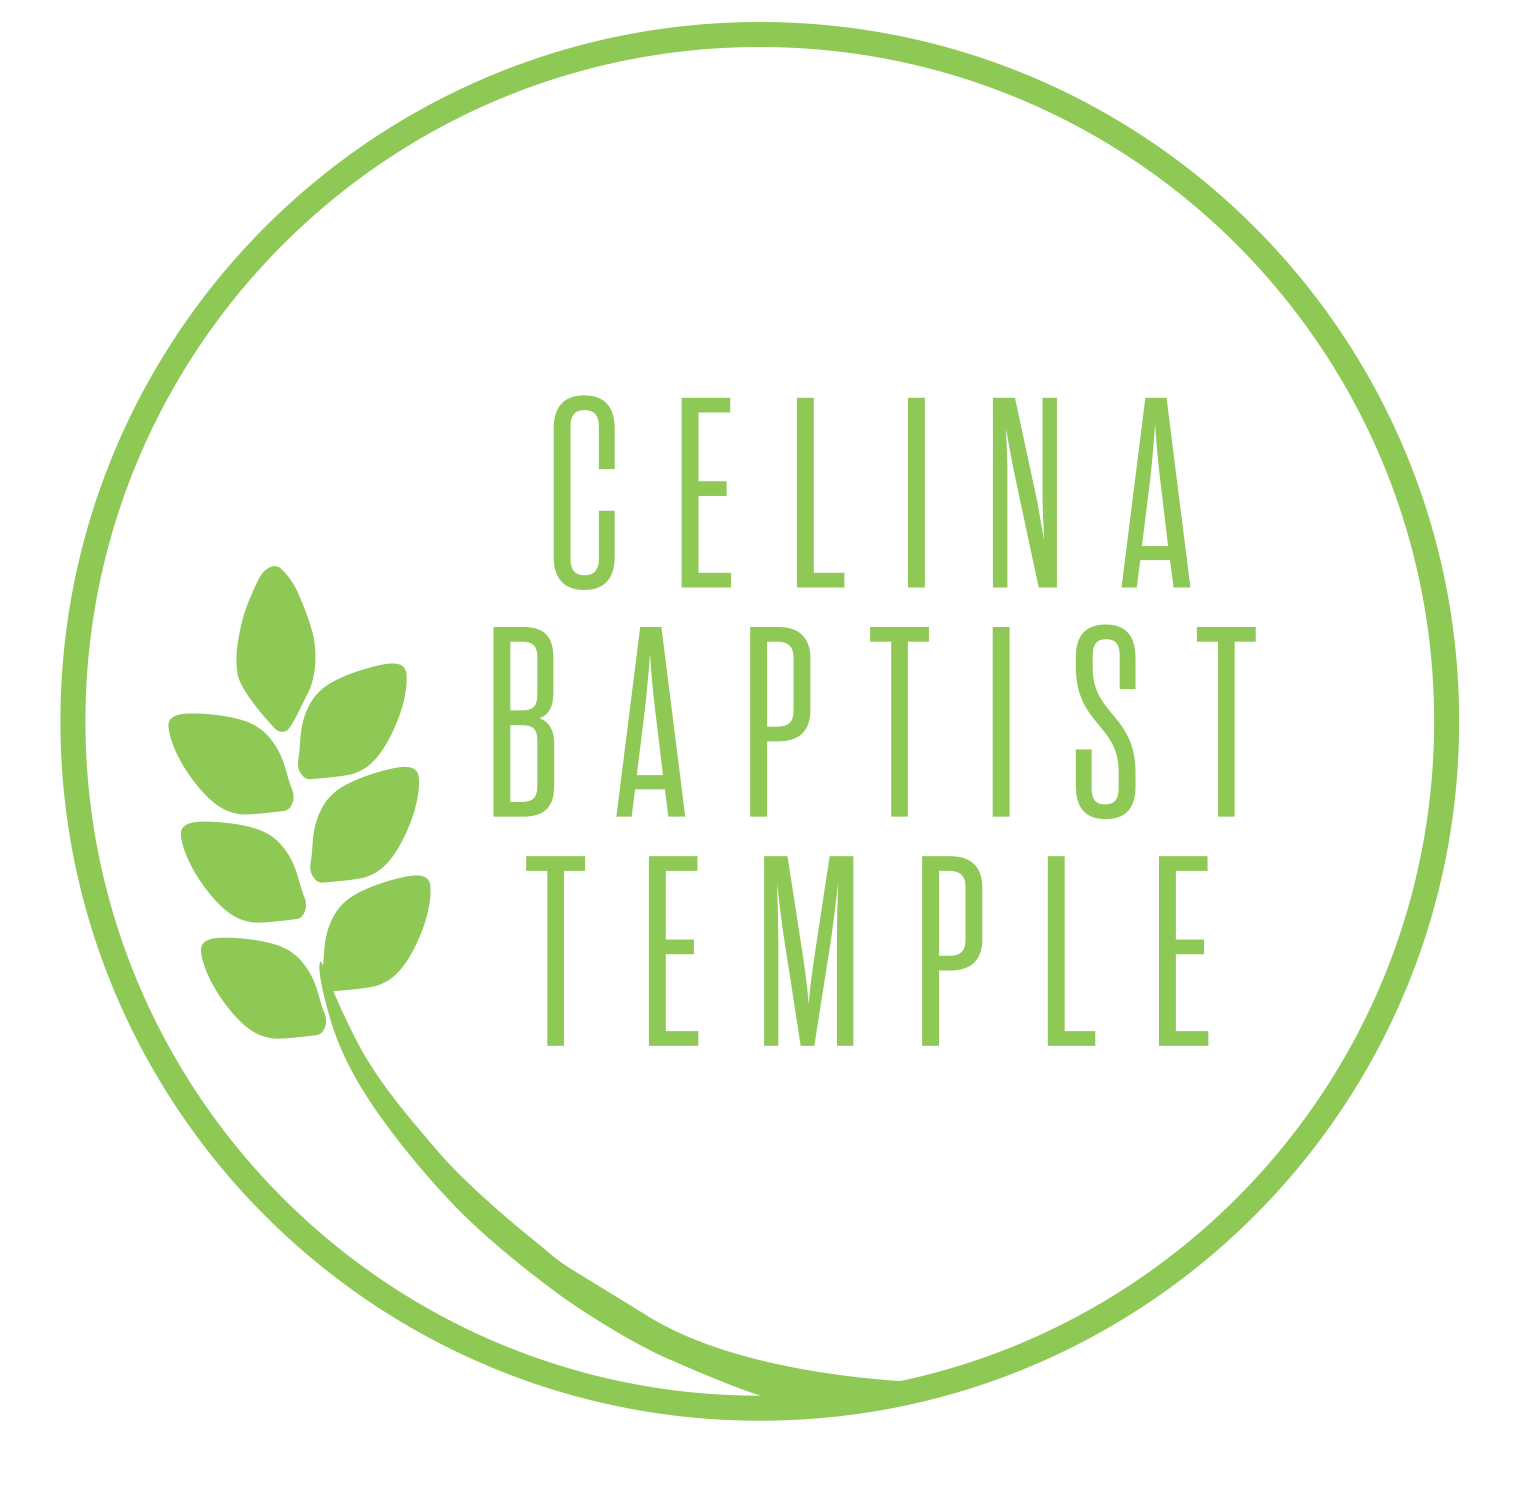 Celina Baptist Temple